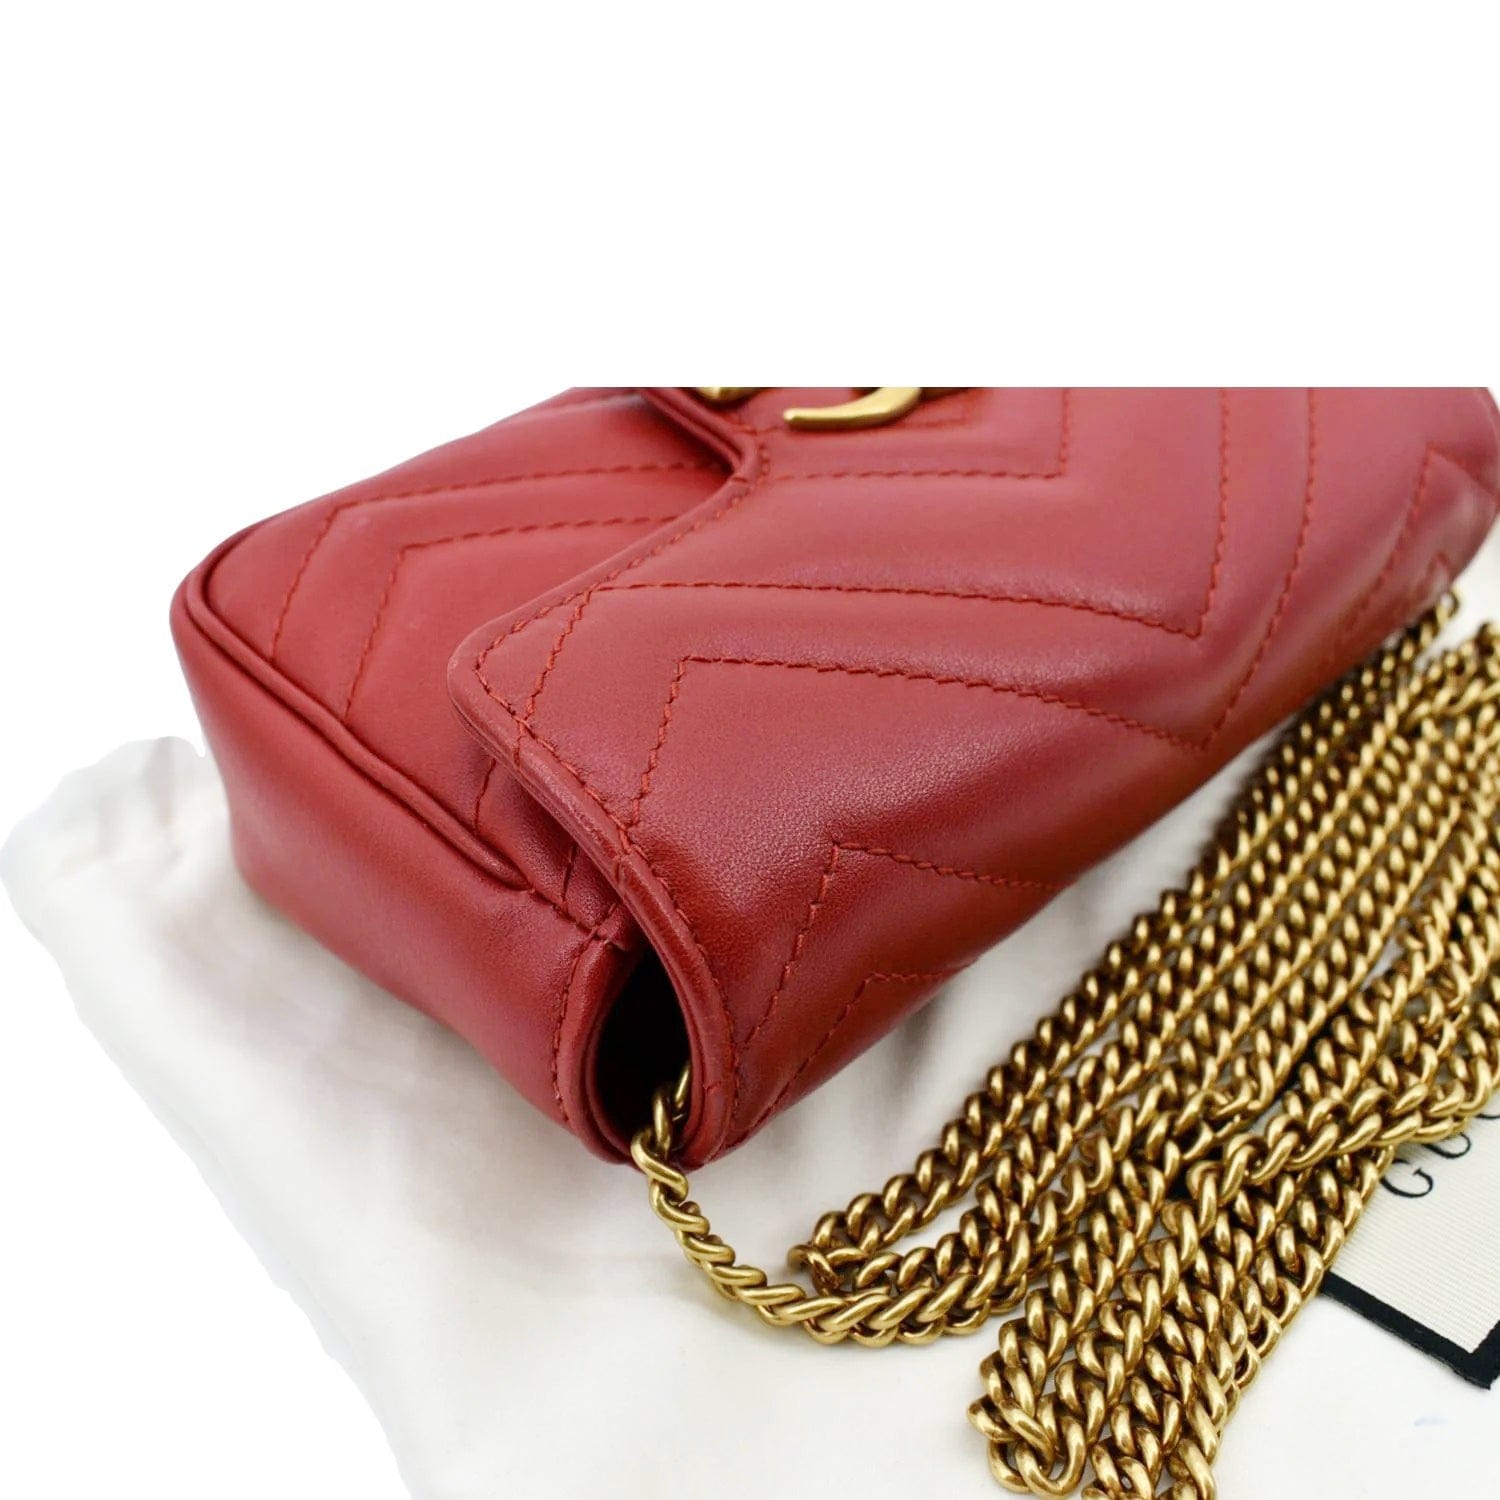 GUCCI-GG-Marmont-Leather-Super-Mini-Shoulder-Bag-Pink-476433